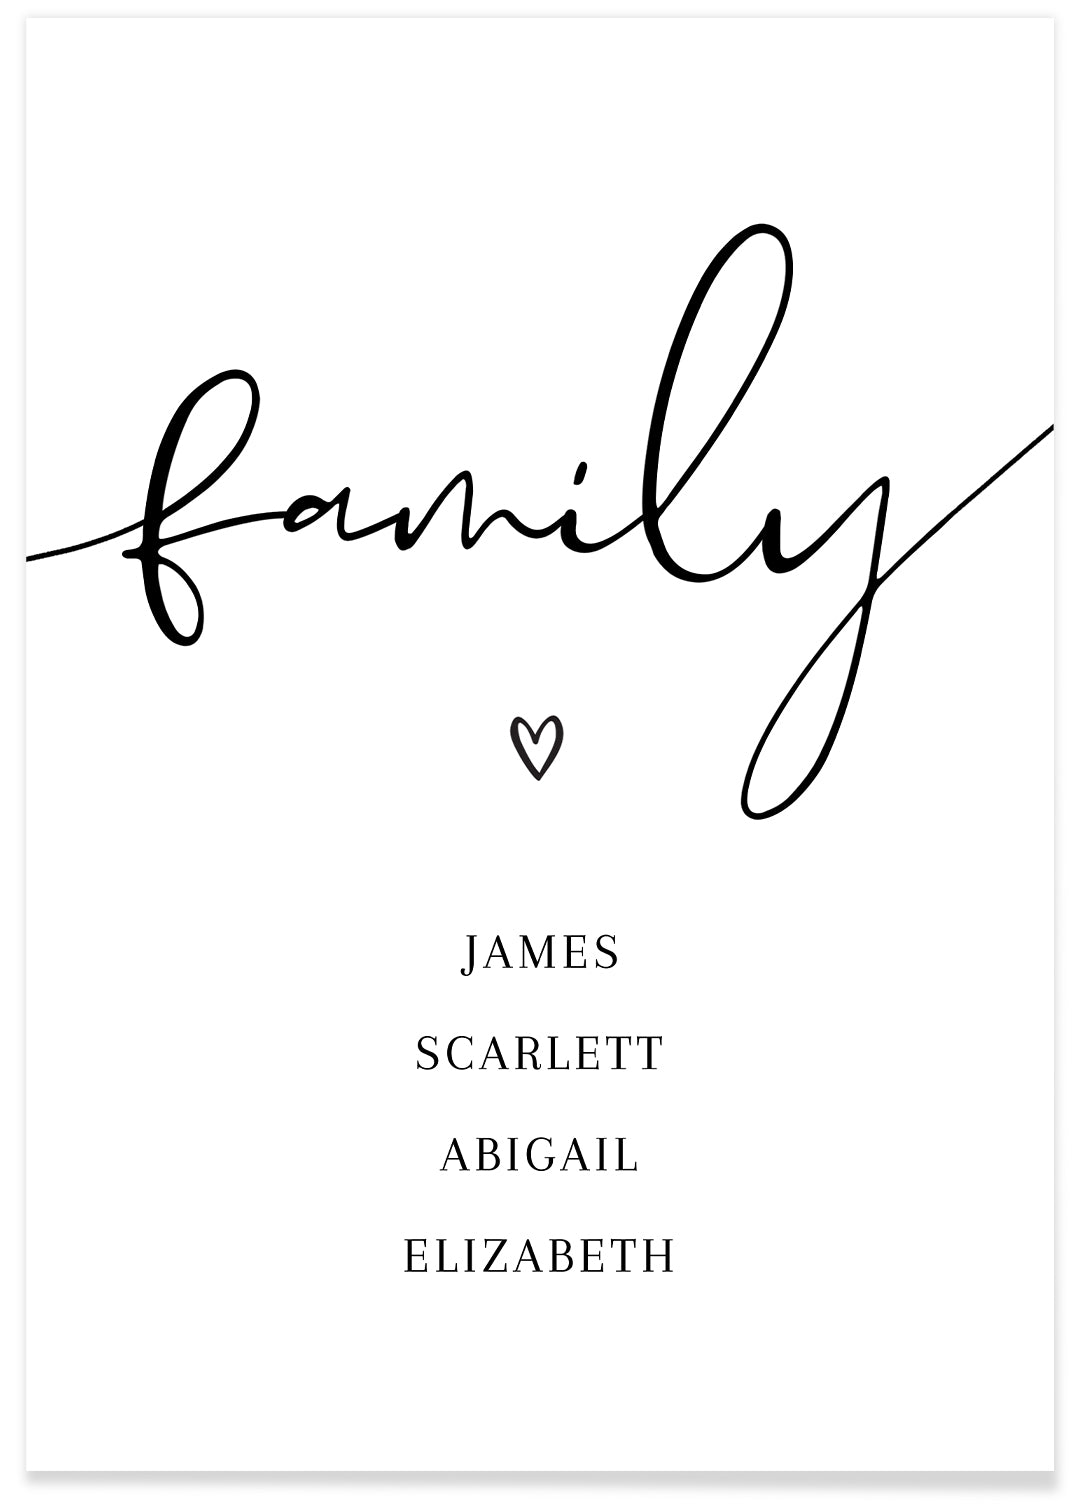 Poster "Family"